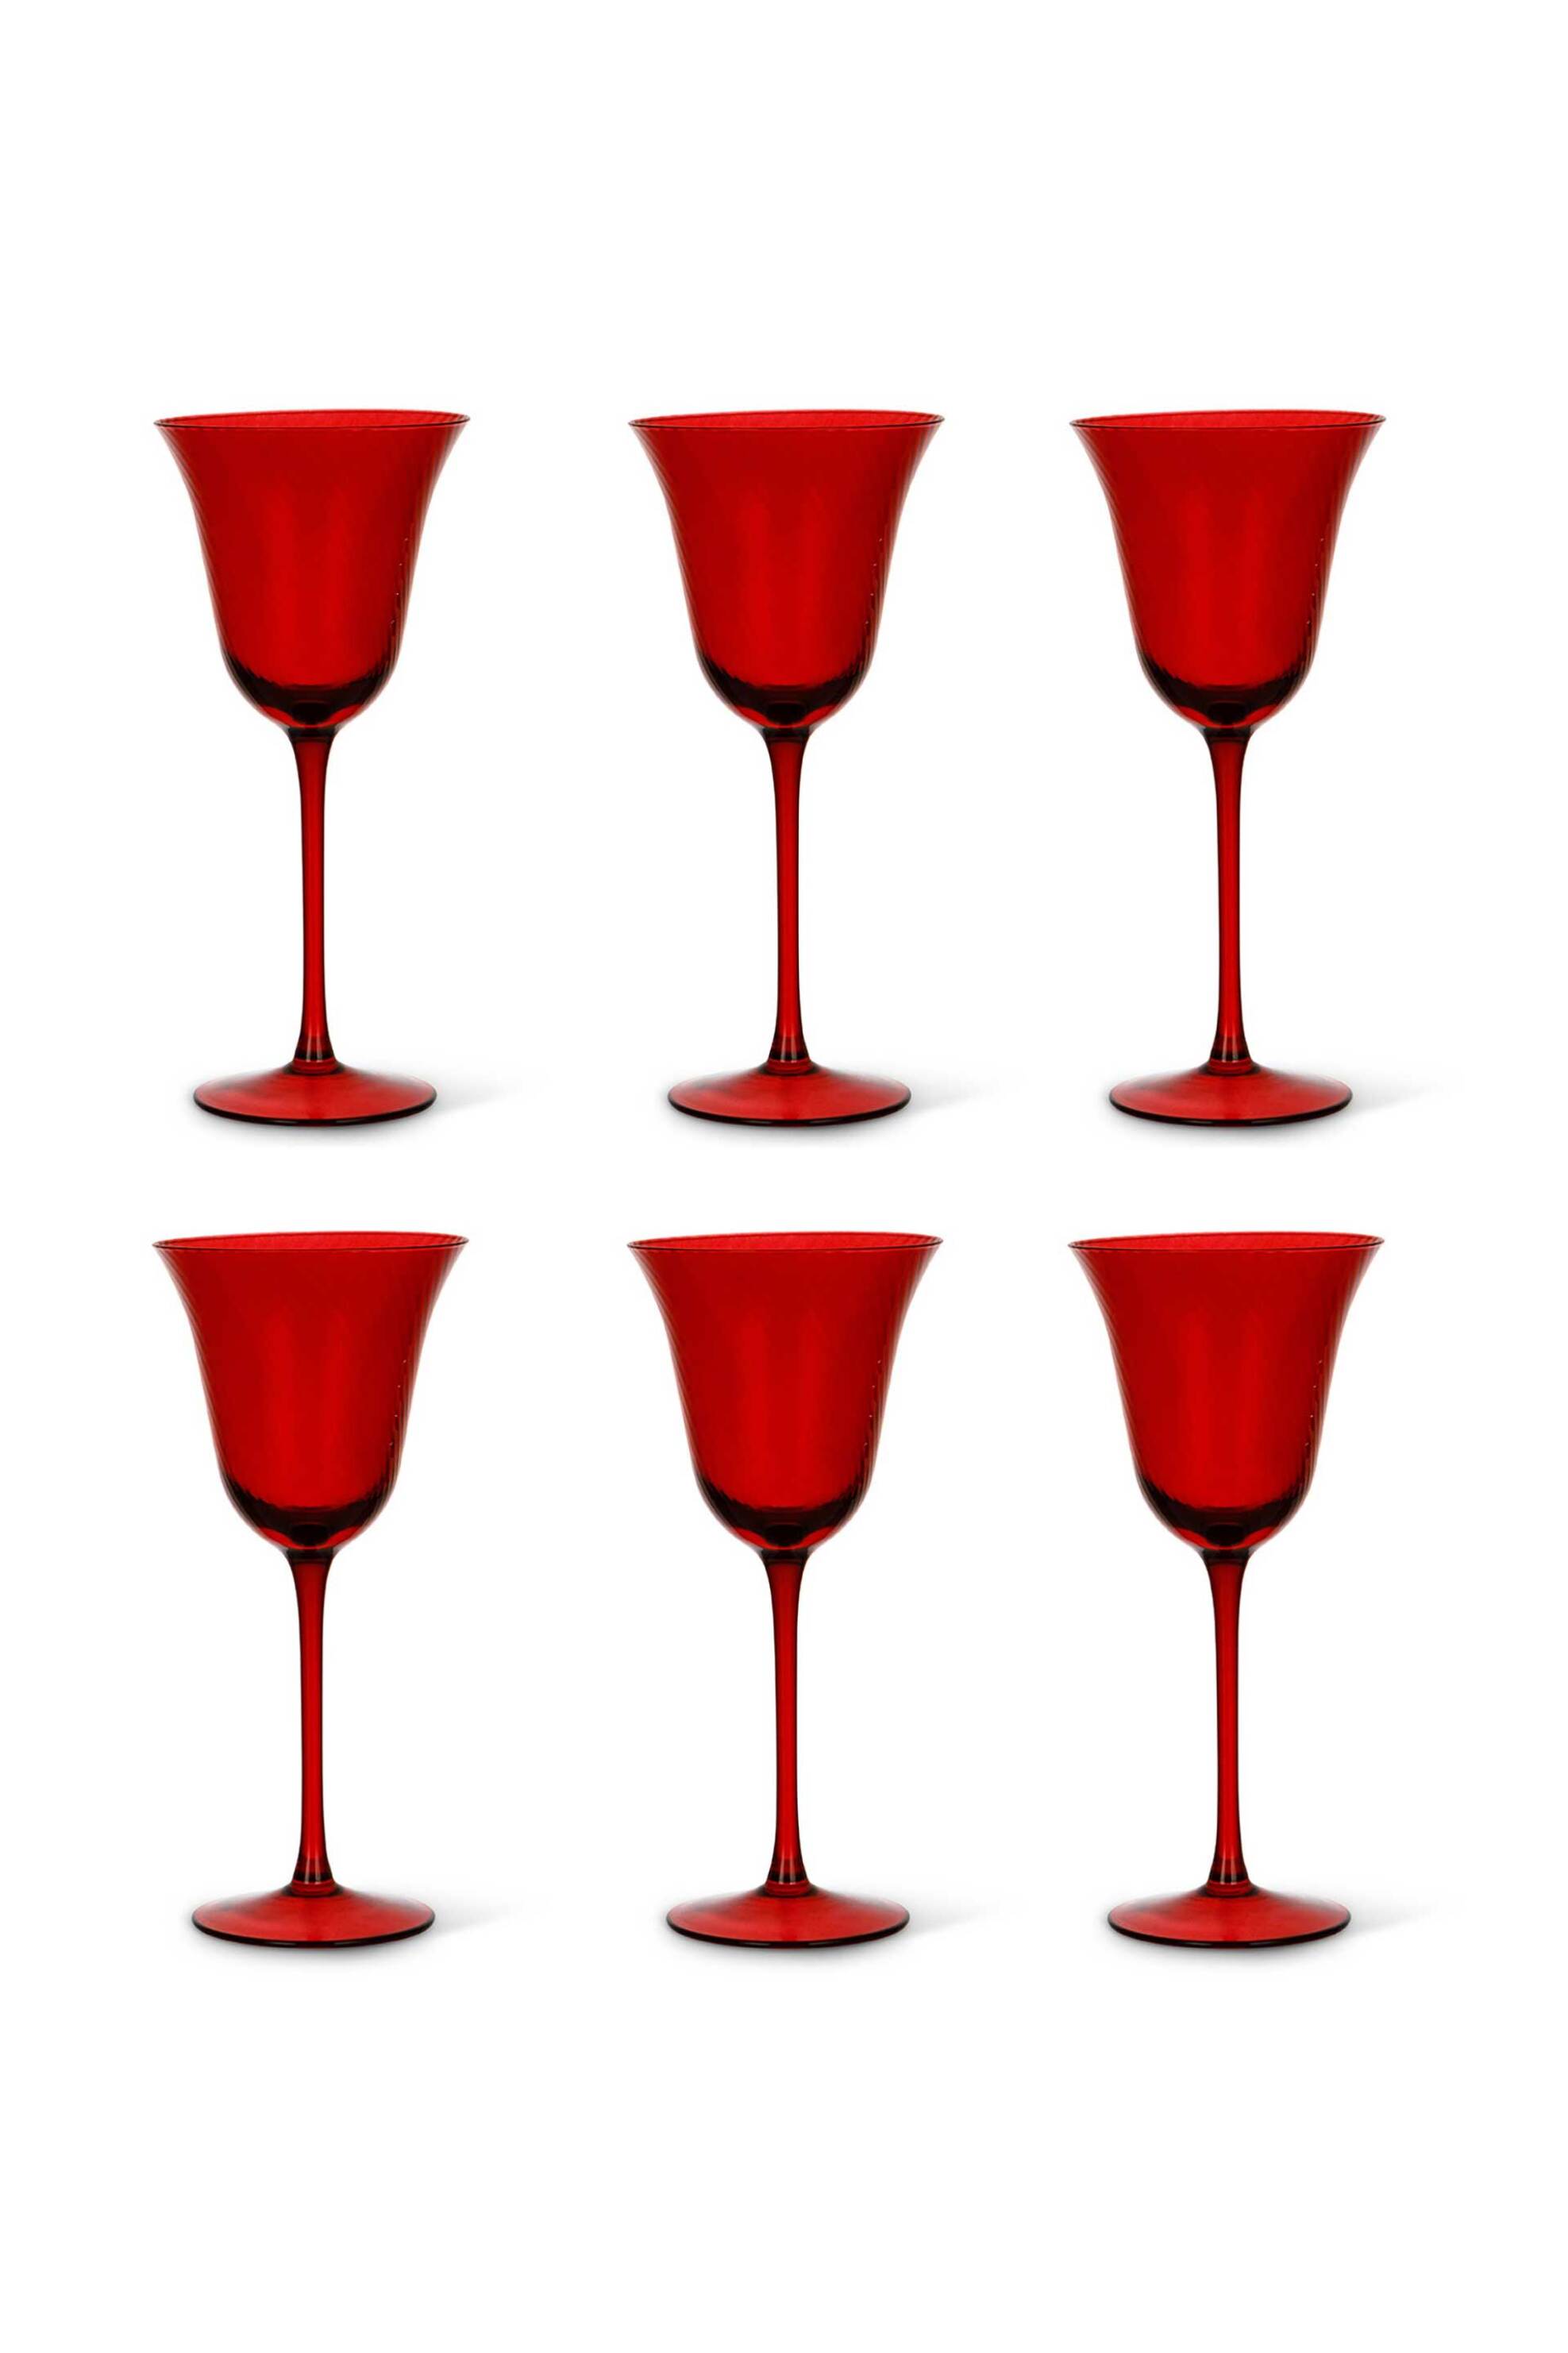 Home > ΚΟΥΖΙΝΑ > Υαλικά > Ποτήρια Coincasa σετ ποτήρια κρασιού γυάλινα (6 τεμάχια) - 007379609 Κόκκινο